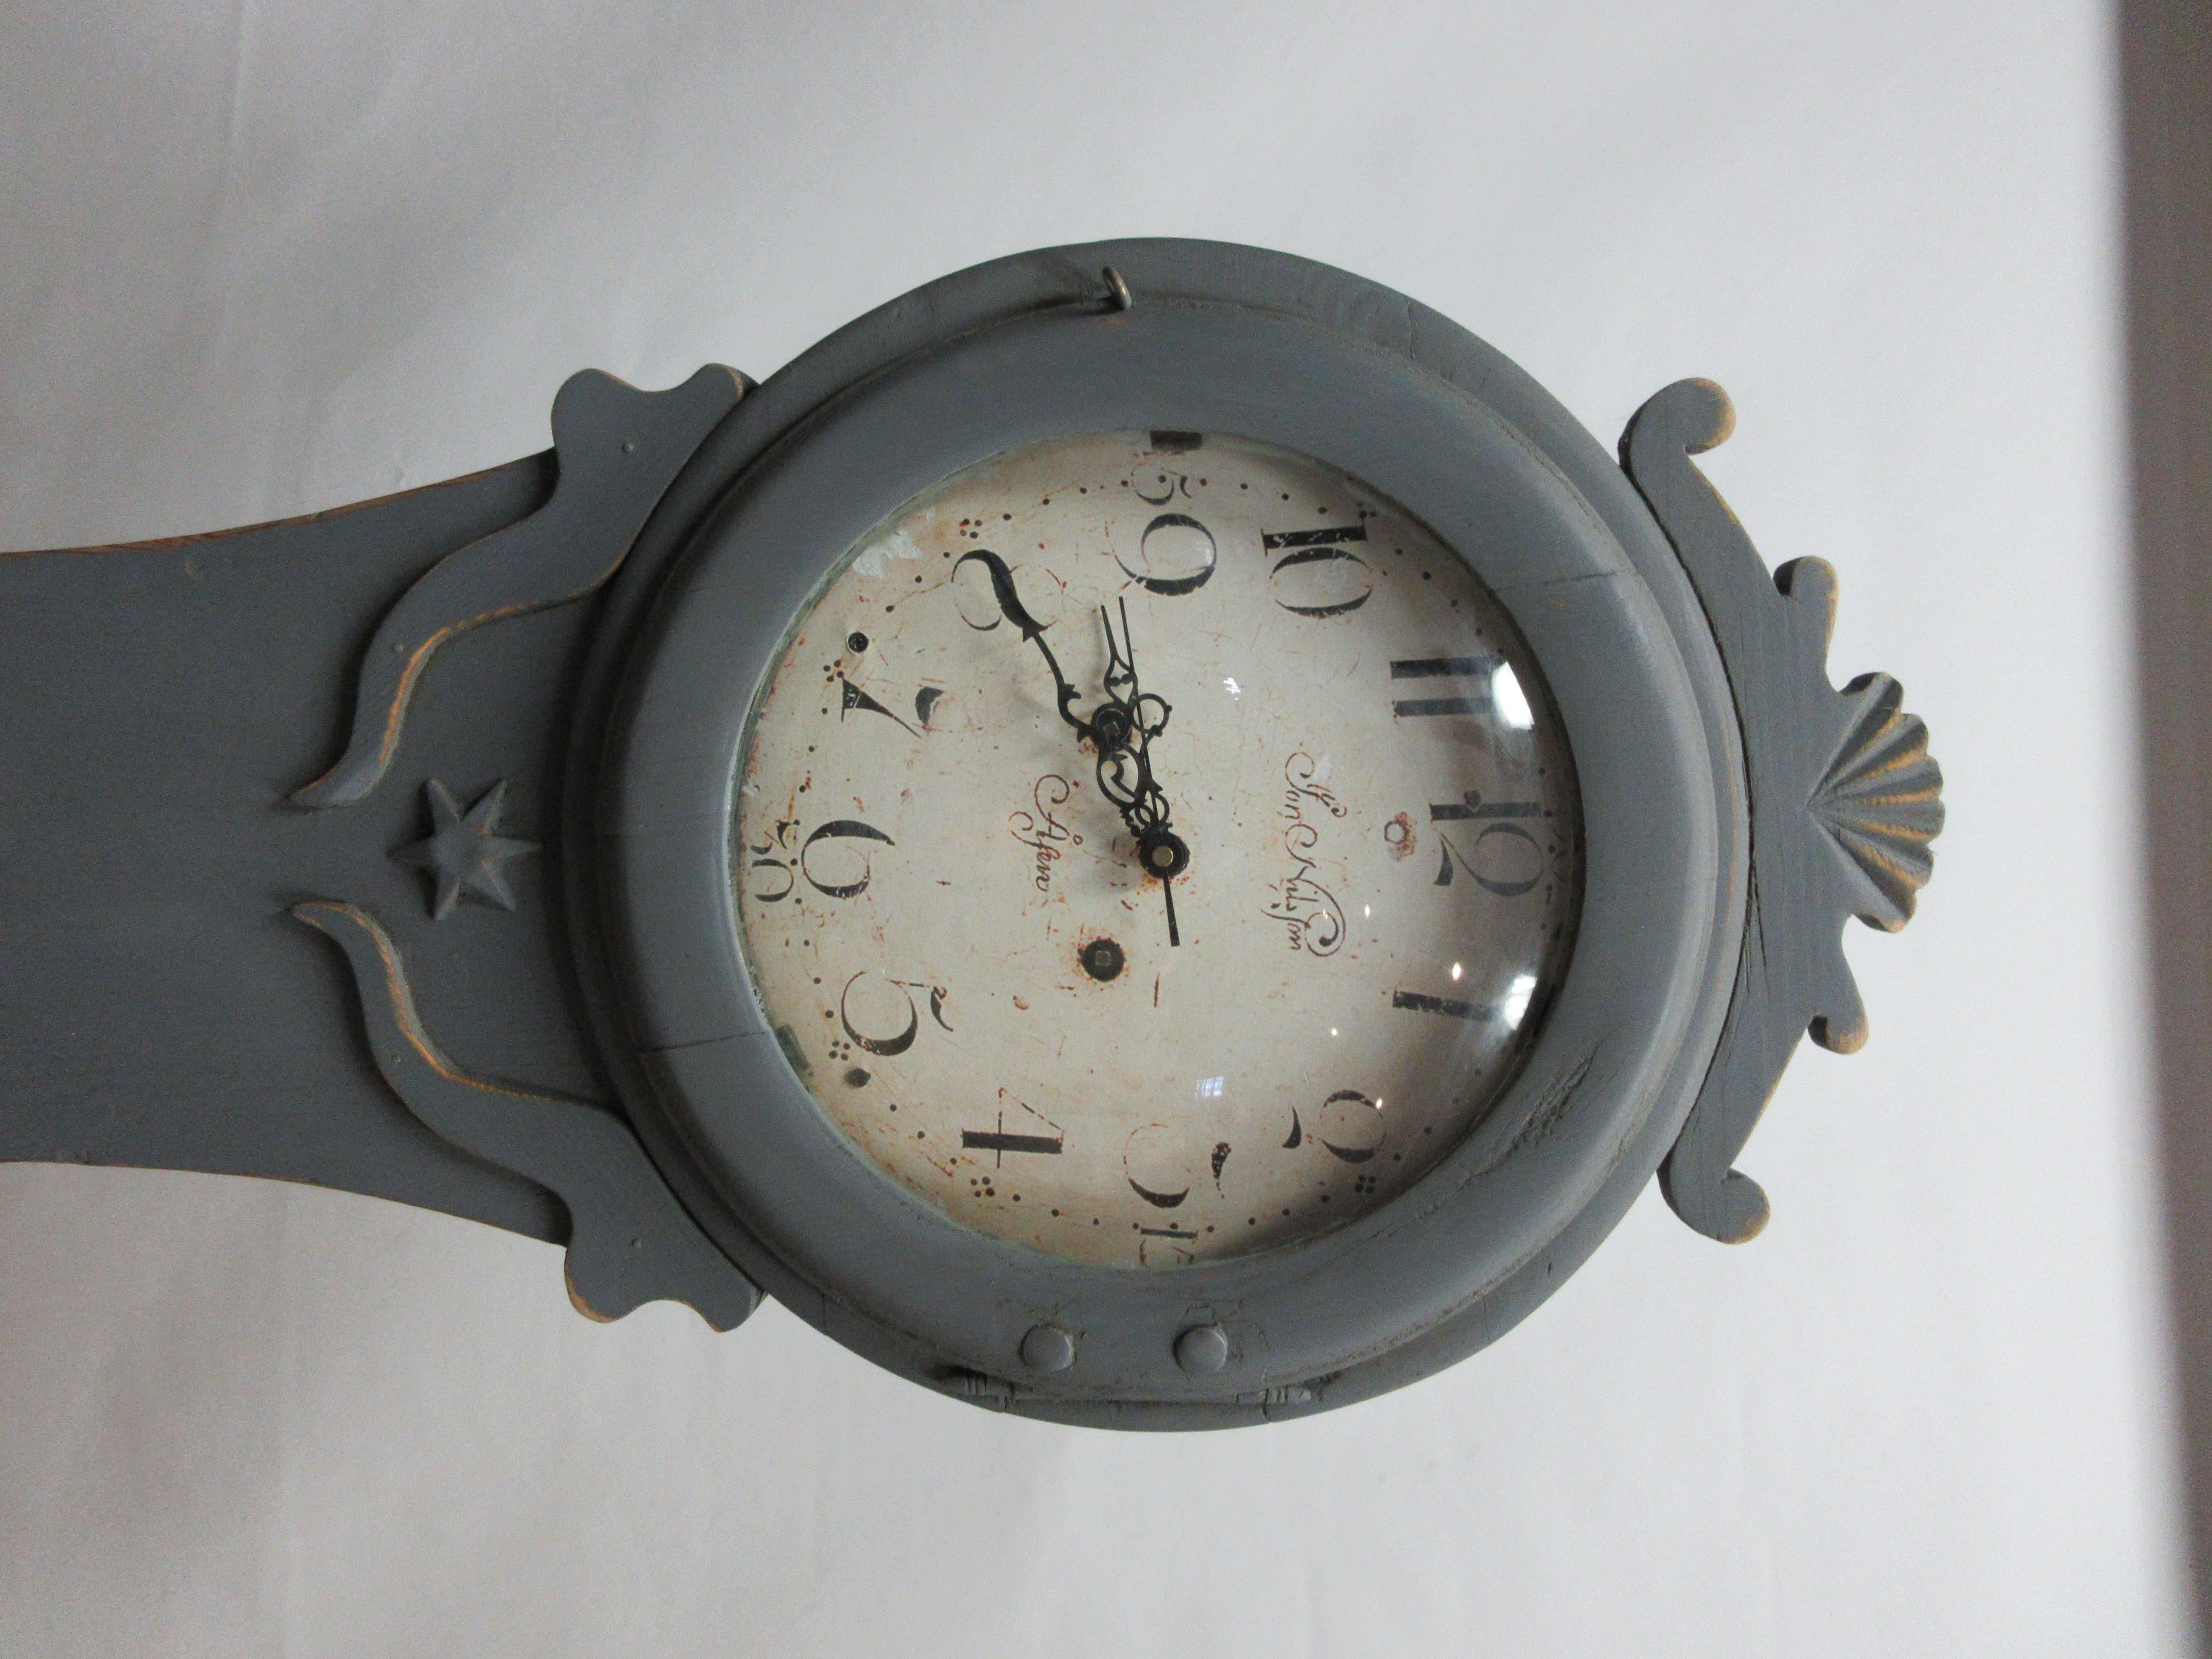 This is a Swedish Mora clock, 